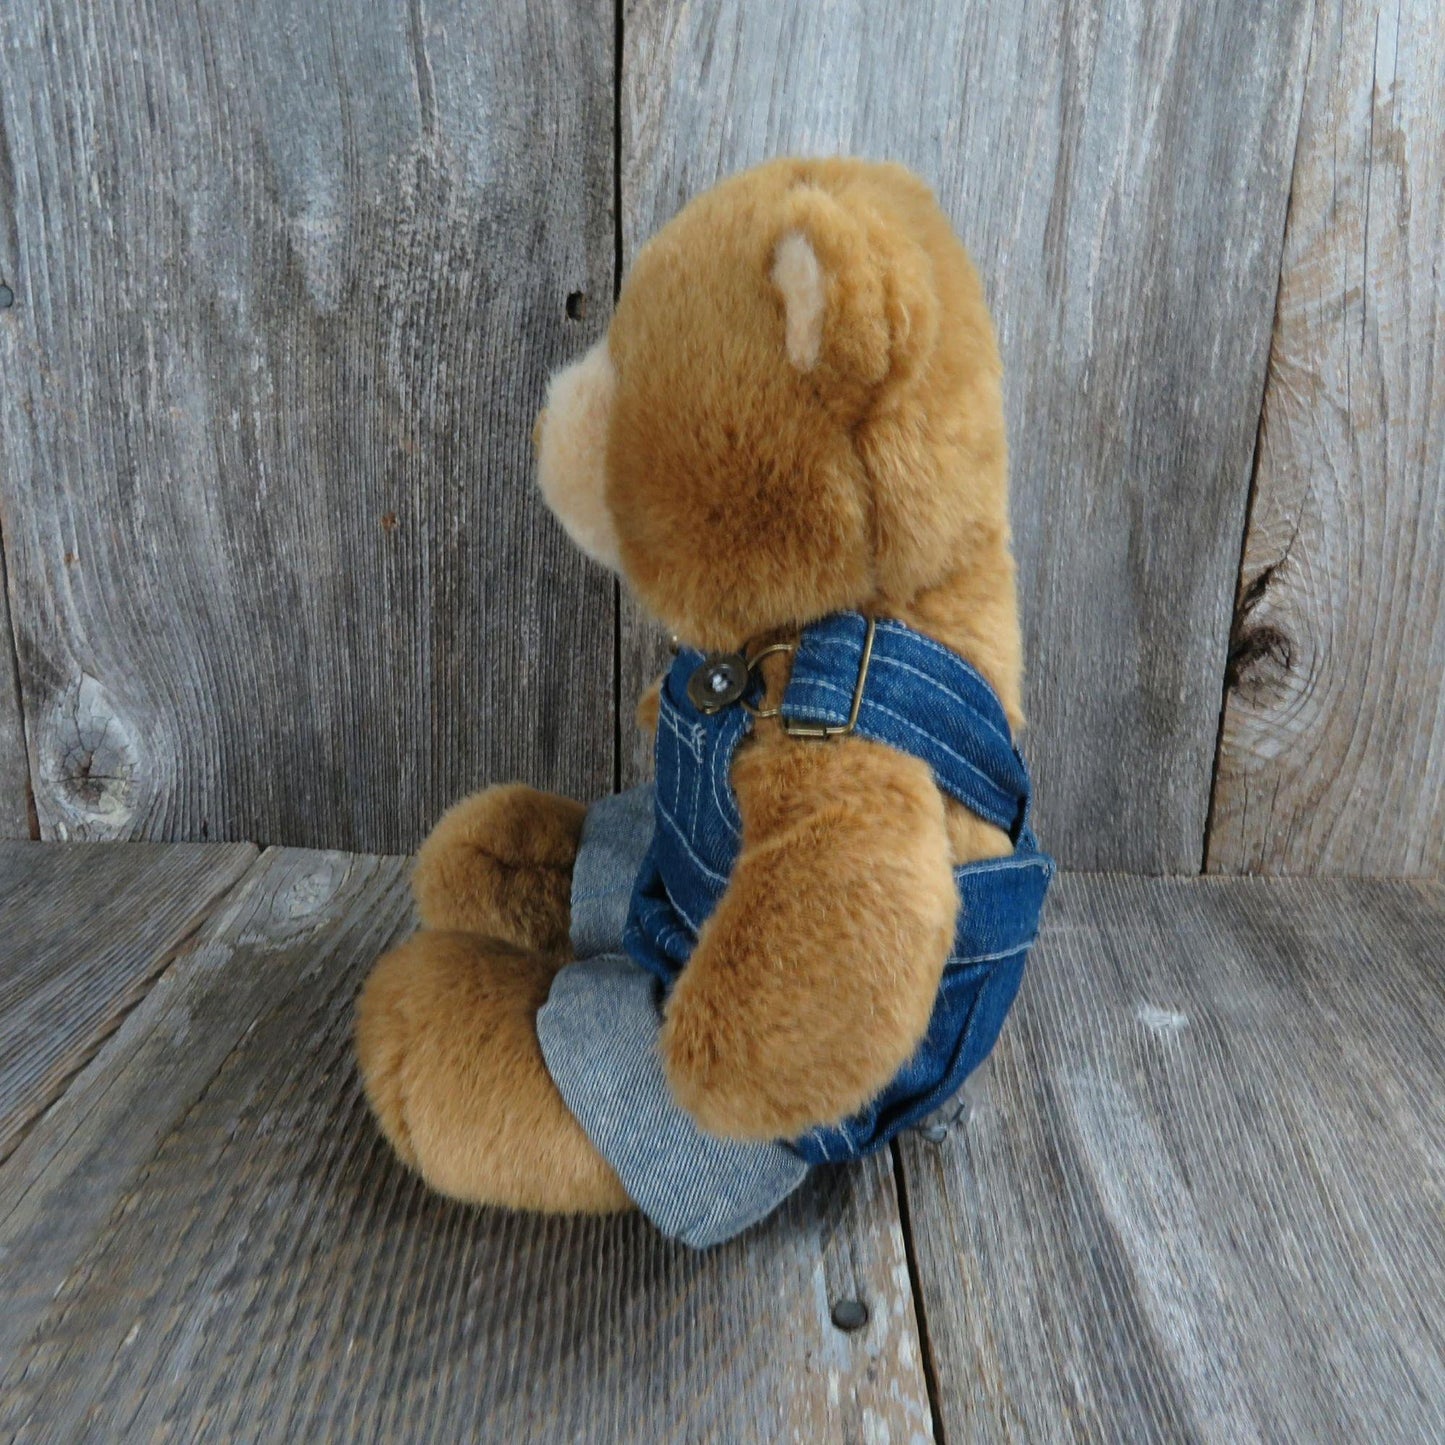 Vintage Build A Bear Light Brown Teddy Plush Overalls Stuffed Animal 11 Inch 1997 90s BABW